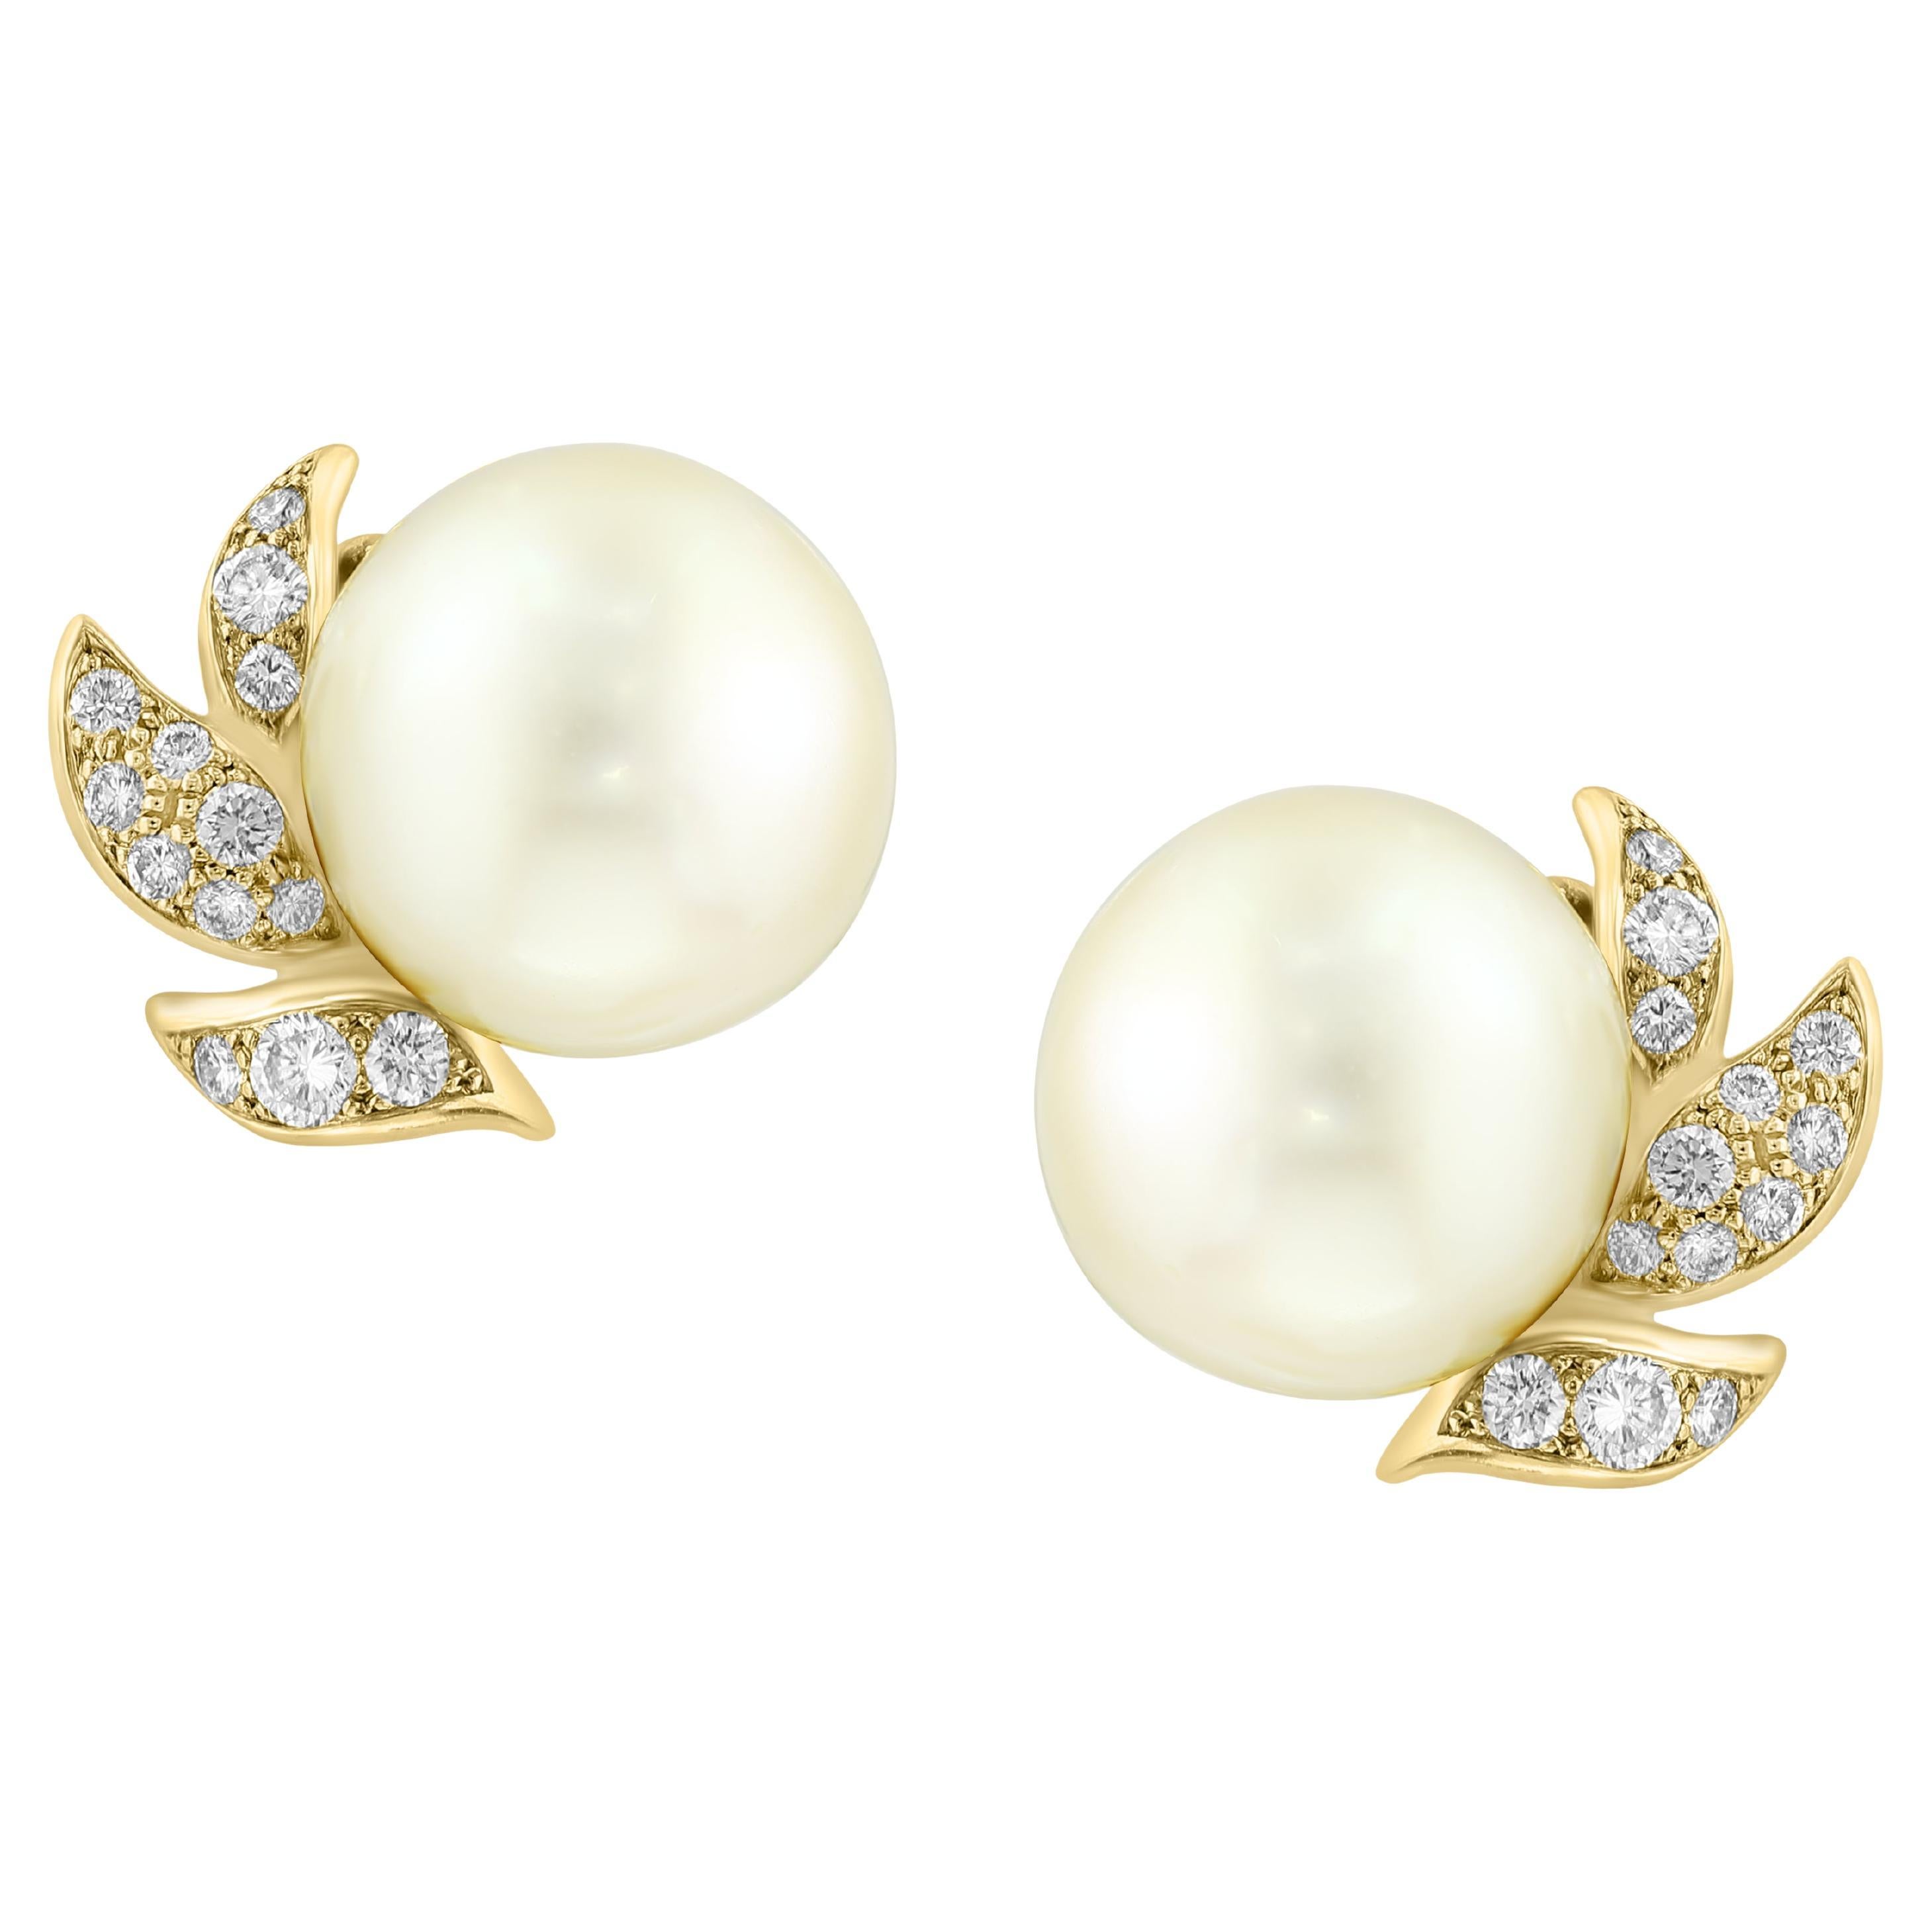 Designer A.Reza's Cream South Sea Pearl & Dimond Stud Earrings 18 K Yellow Gold